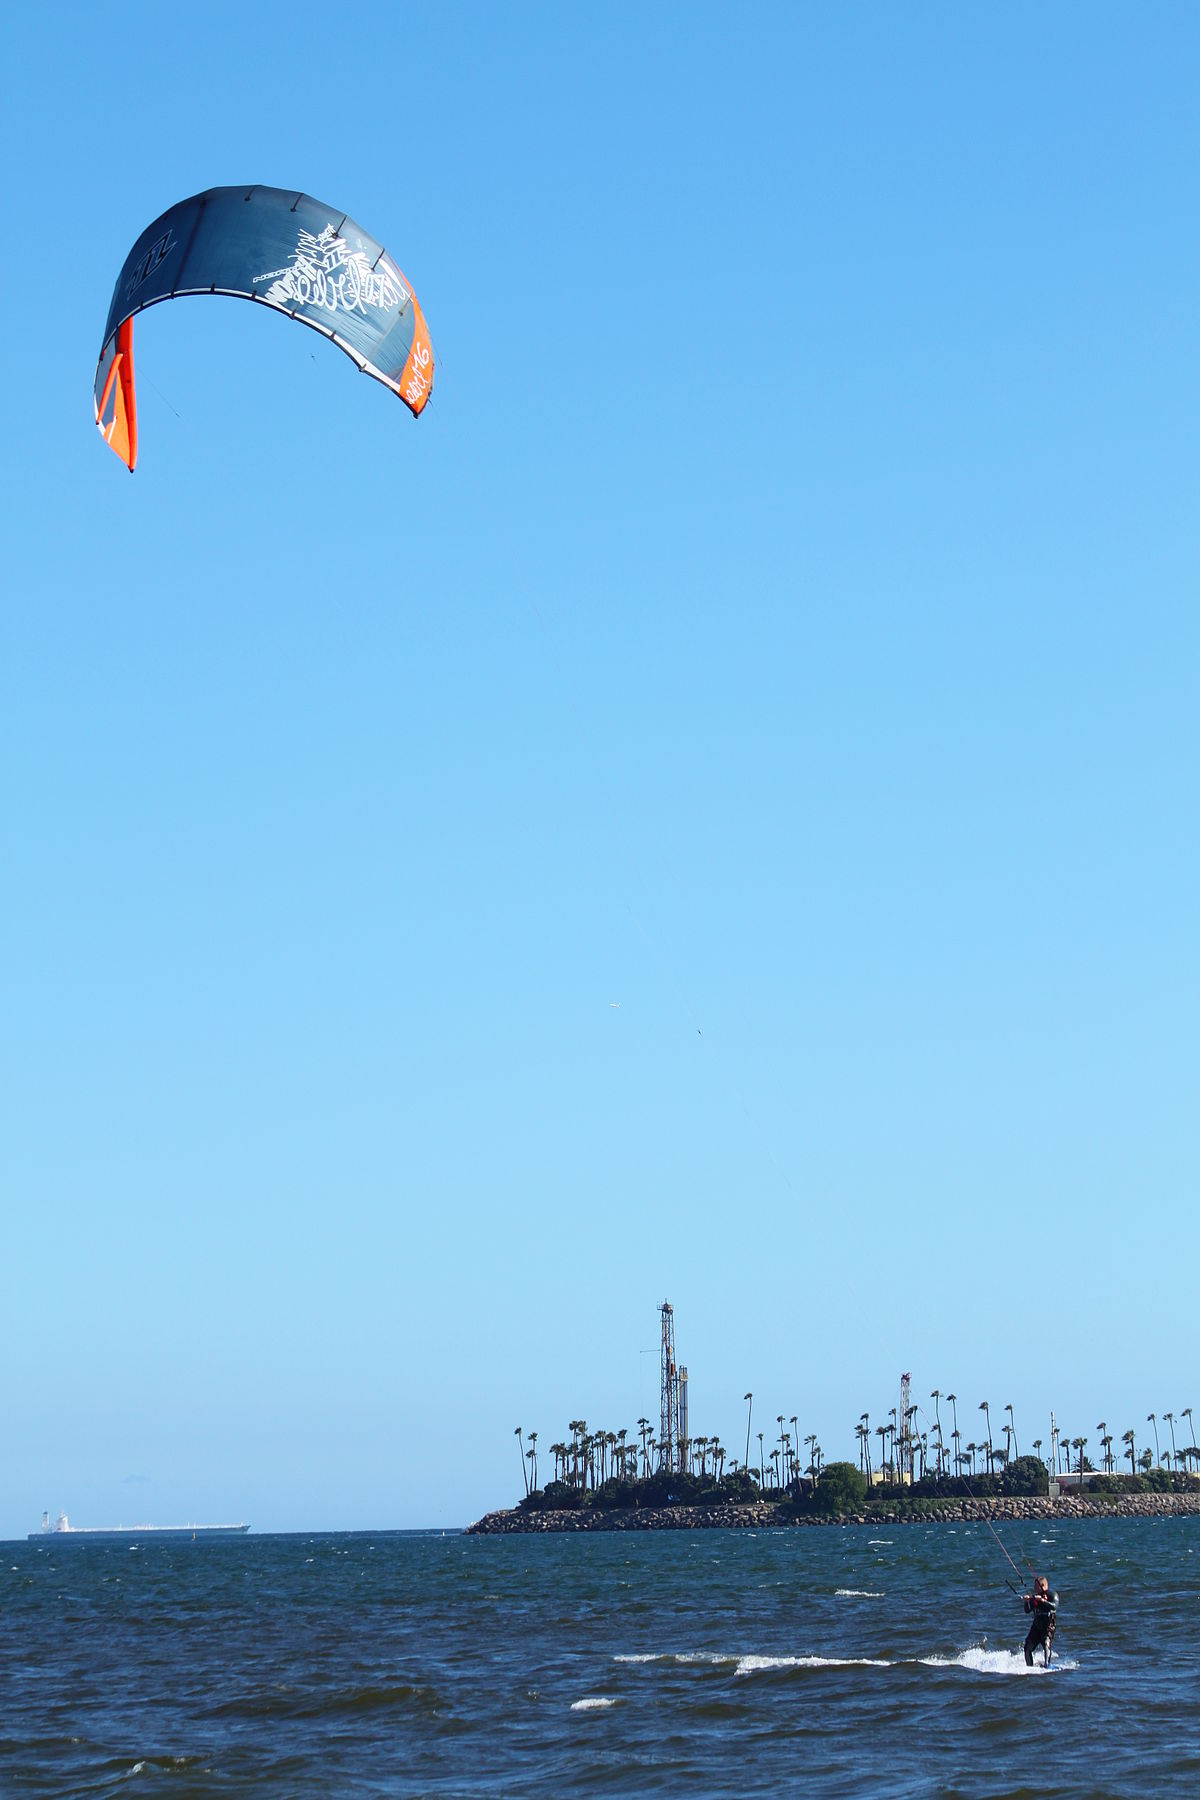 Kite surfer photo